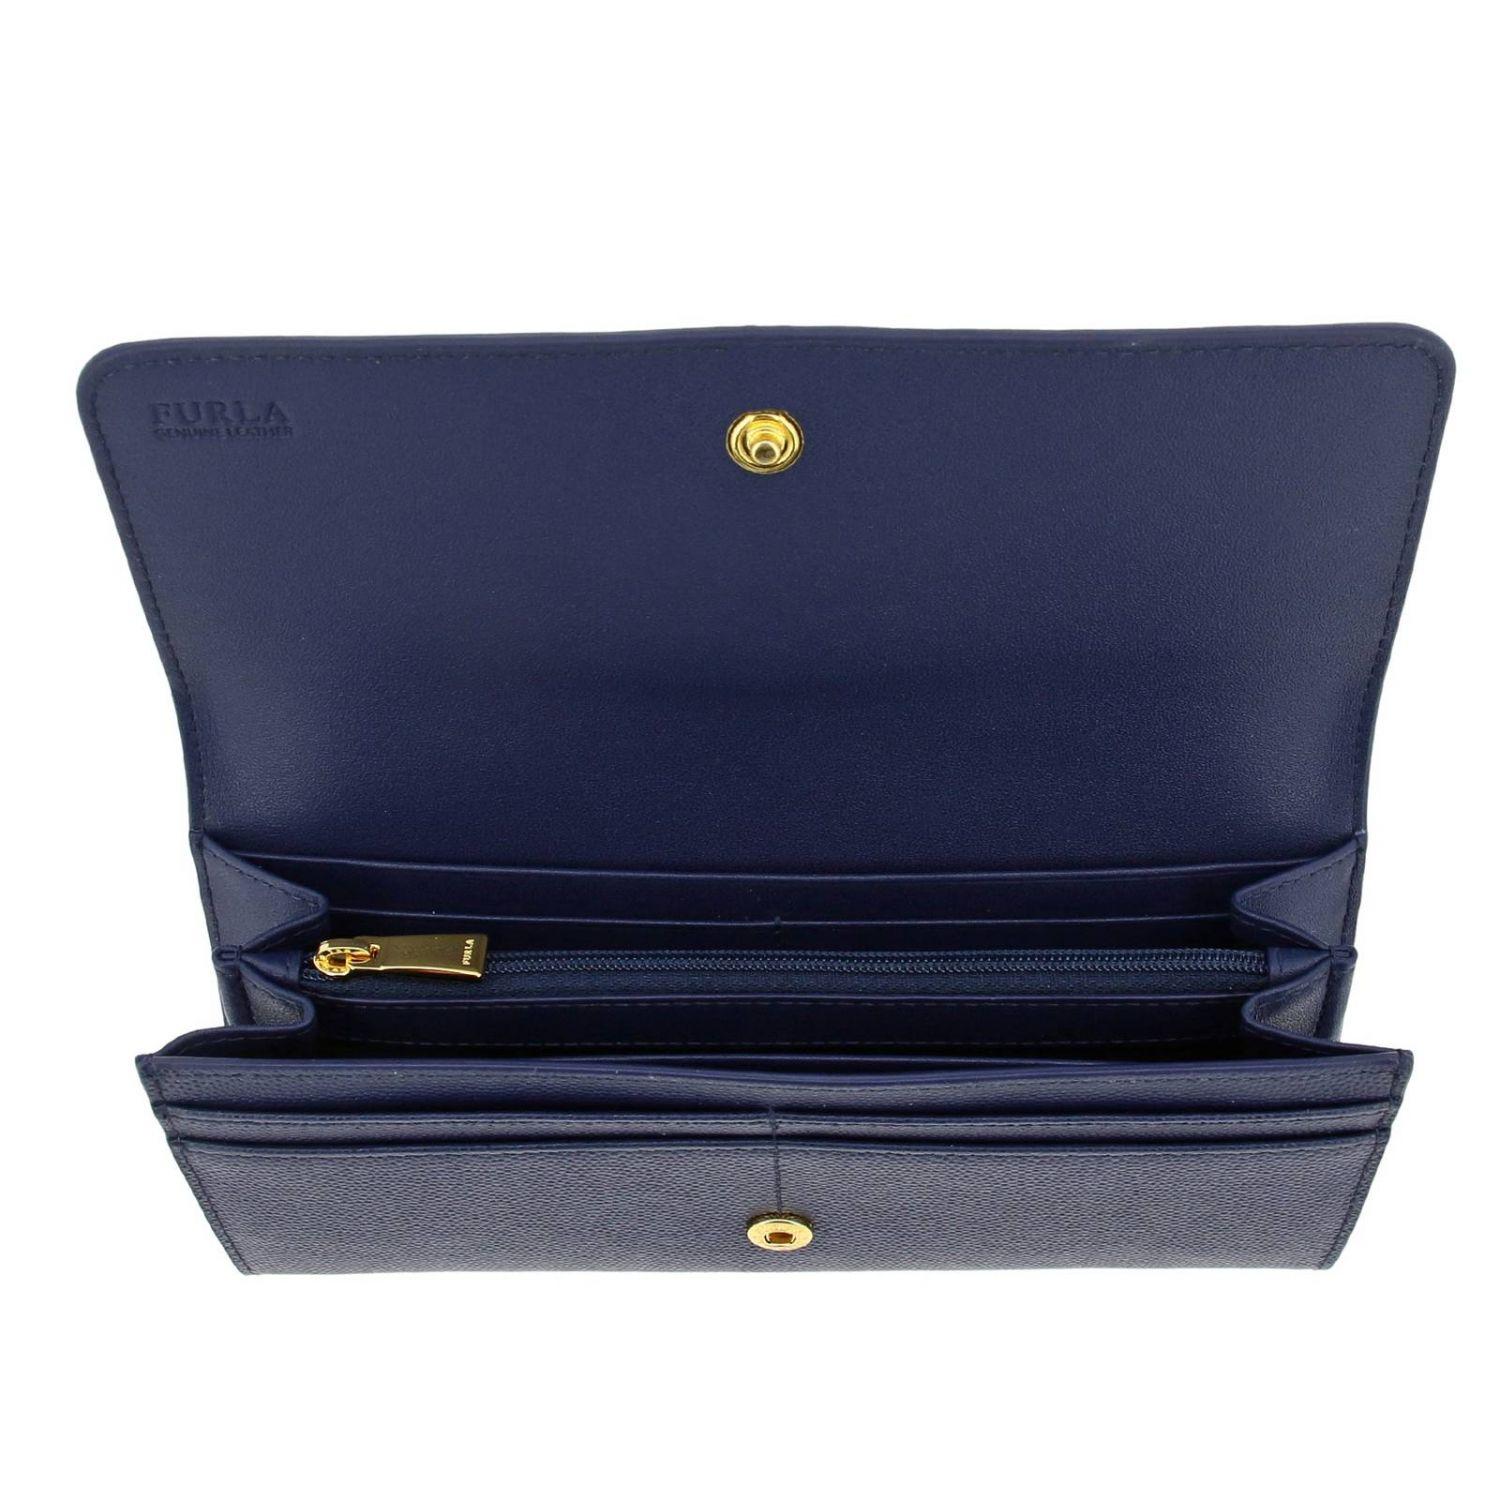 Furla Belvedere Xl Bi-fold Leather Wallet With Monogram in Blue - Lyst